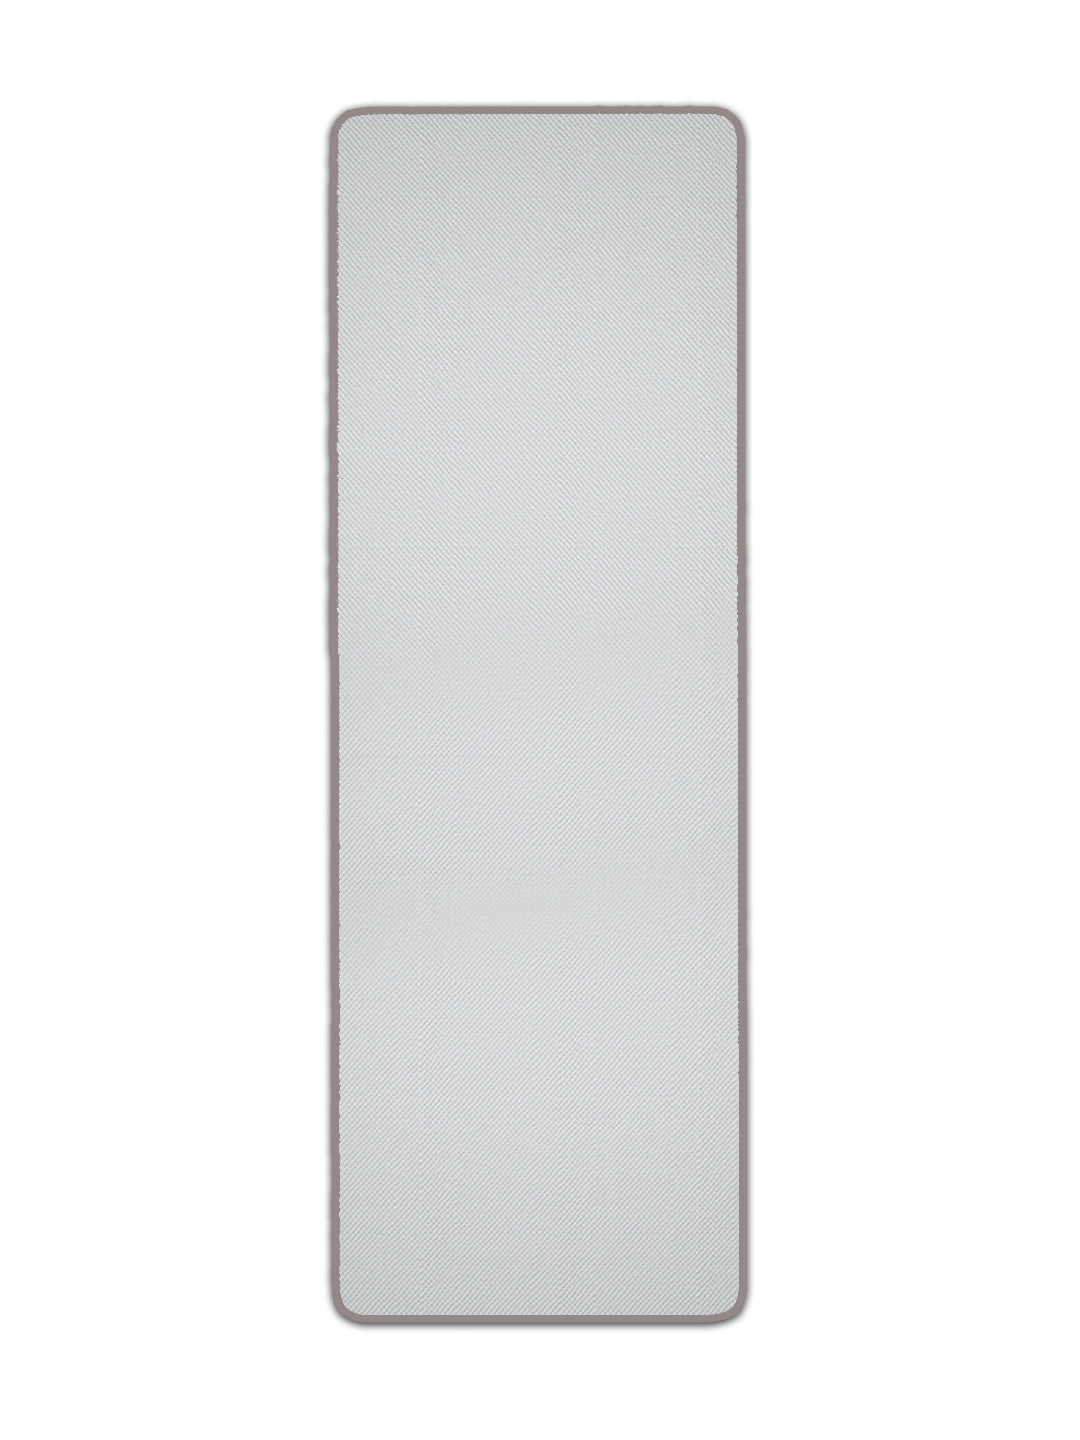 Mark Home 100% Micro Anti Skid Durable Softness Plush Lustrous Rugs 50cm x 150cm Grey